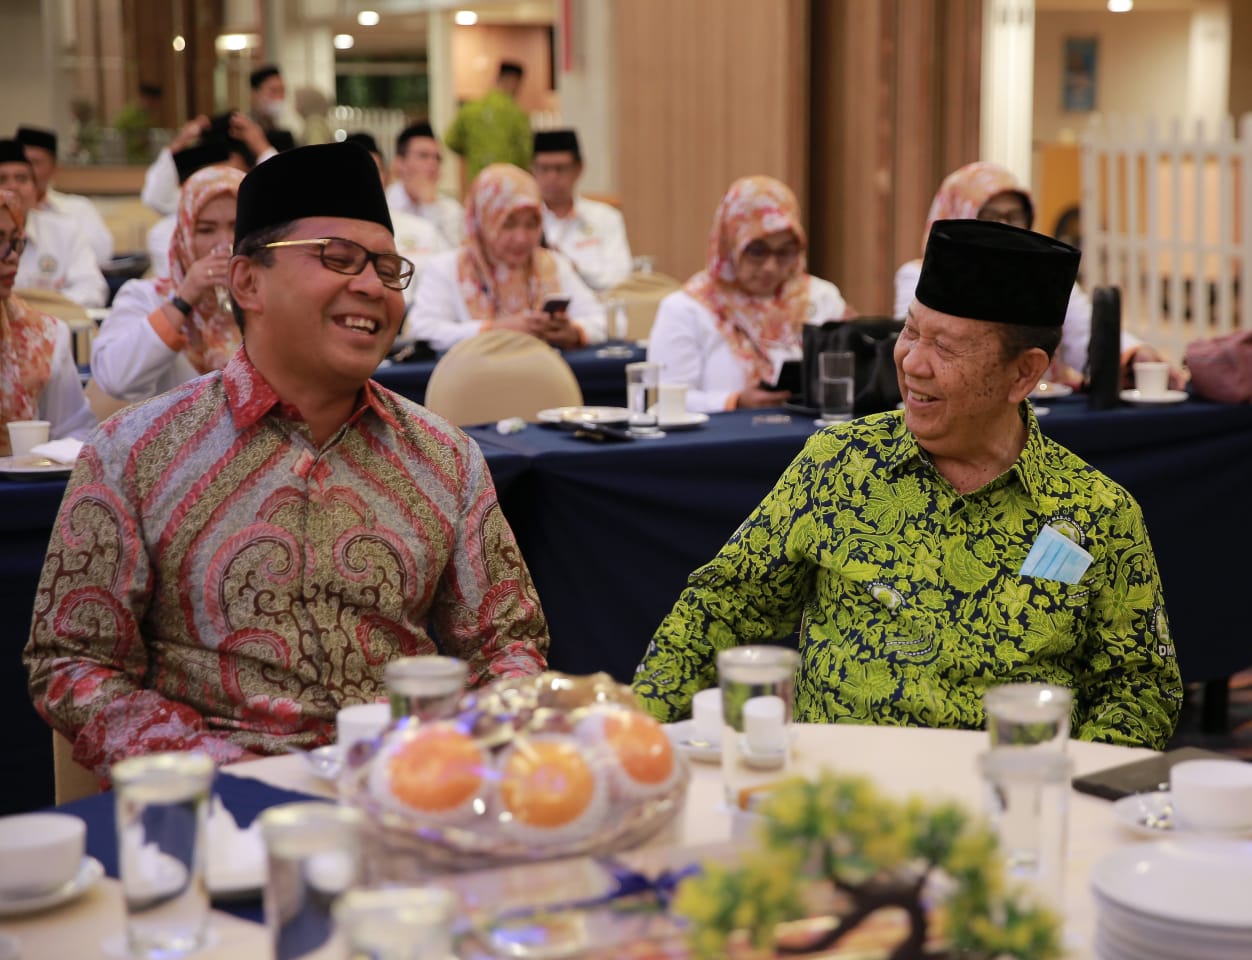 Wali Kota Danny Bersama Pengurus DMI Kota Makassar Bersinergi Perkuat Keimanan Umat